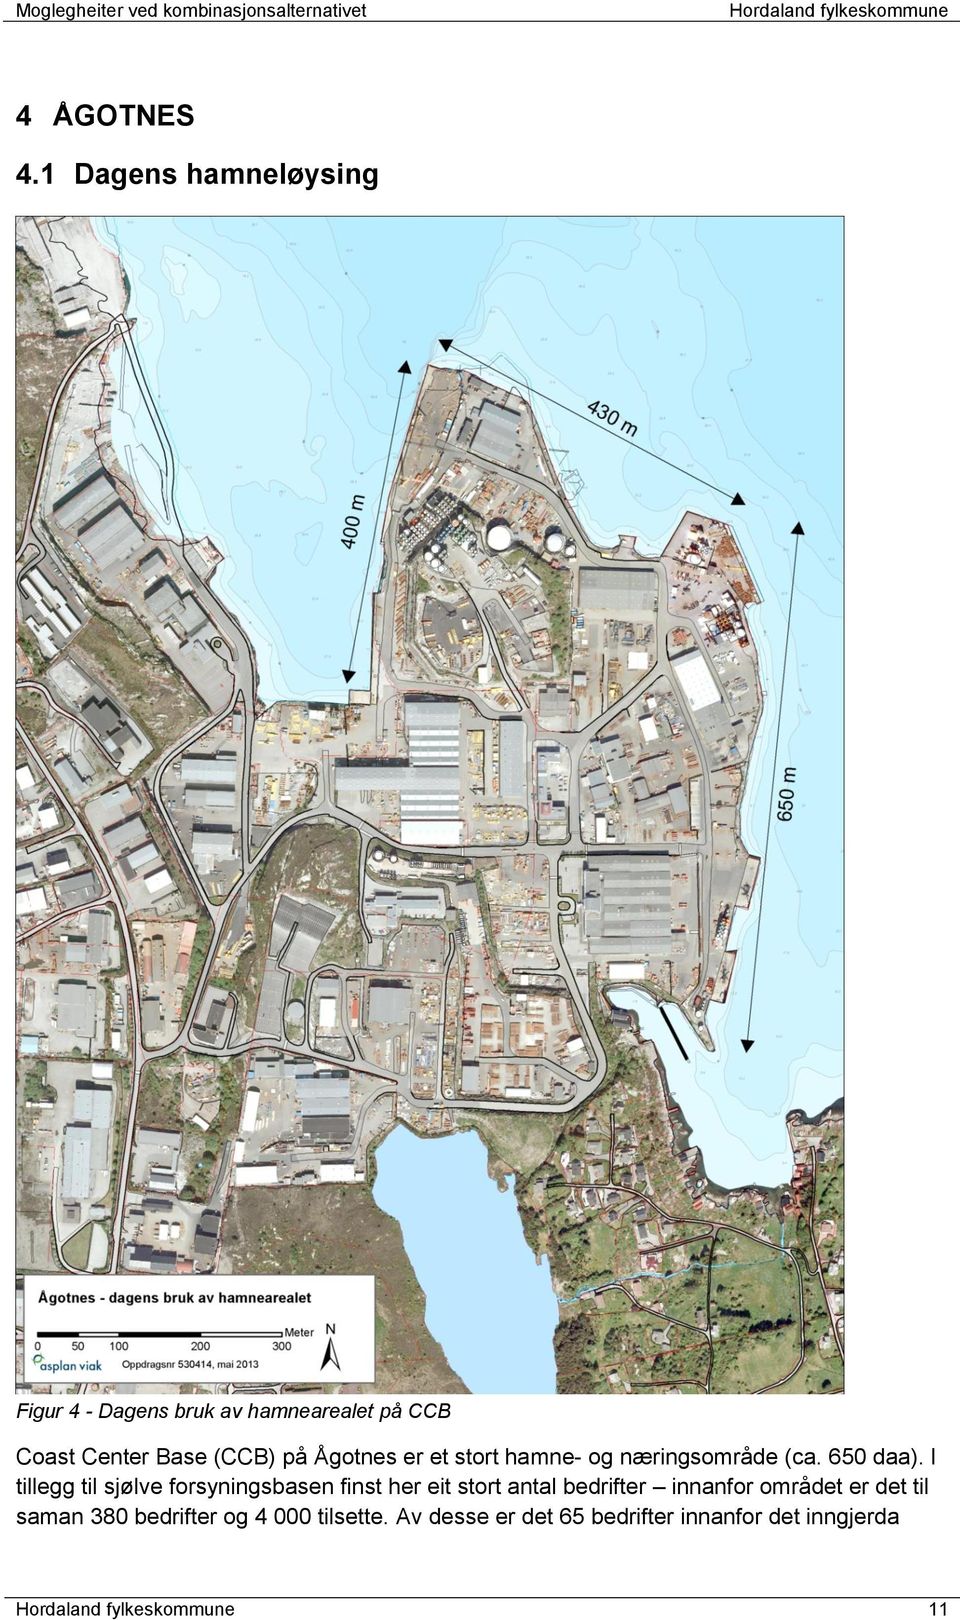 (CCB) på Ågotnes er et stort hamne- og næringsområde (ca. 650 daa).